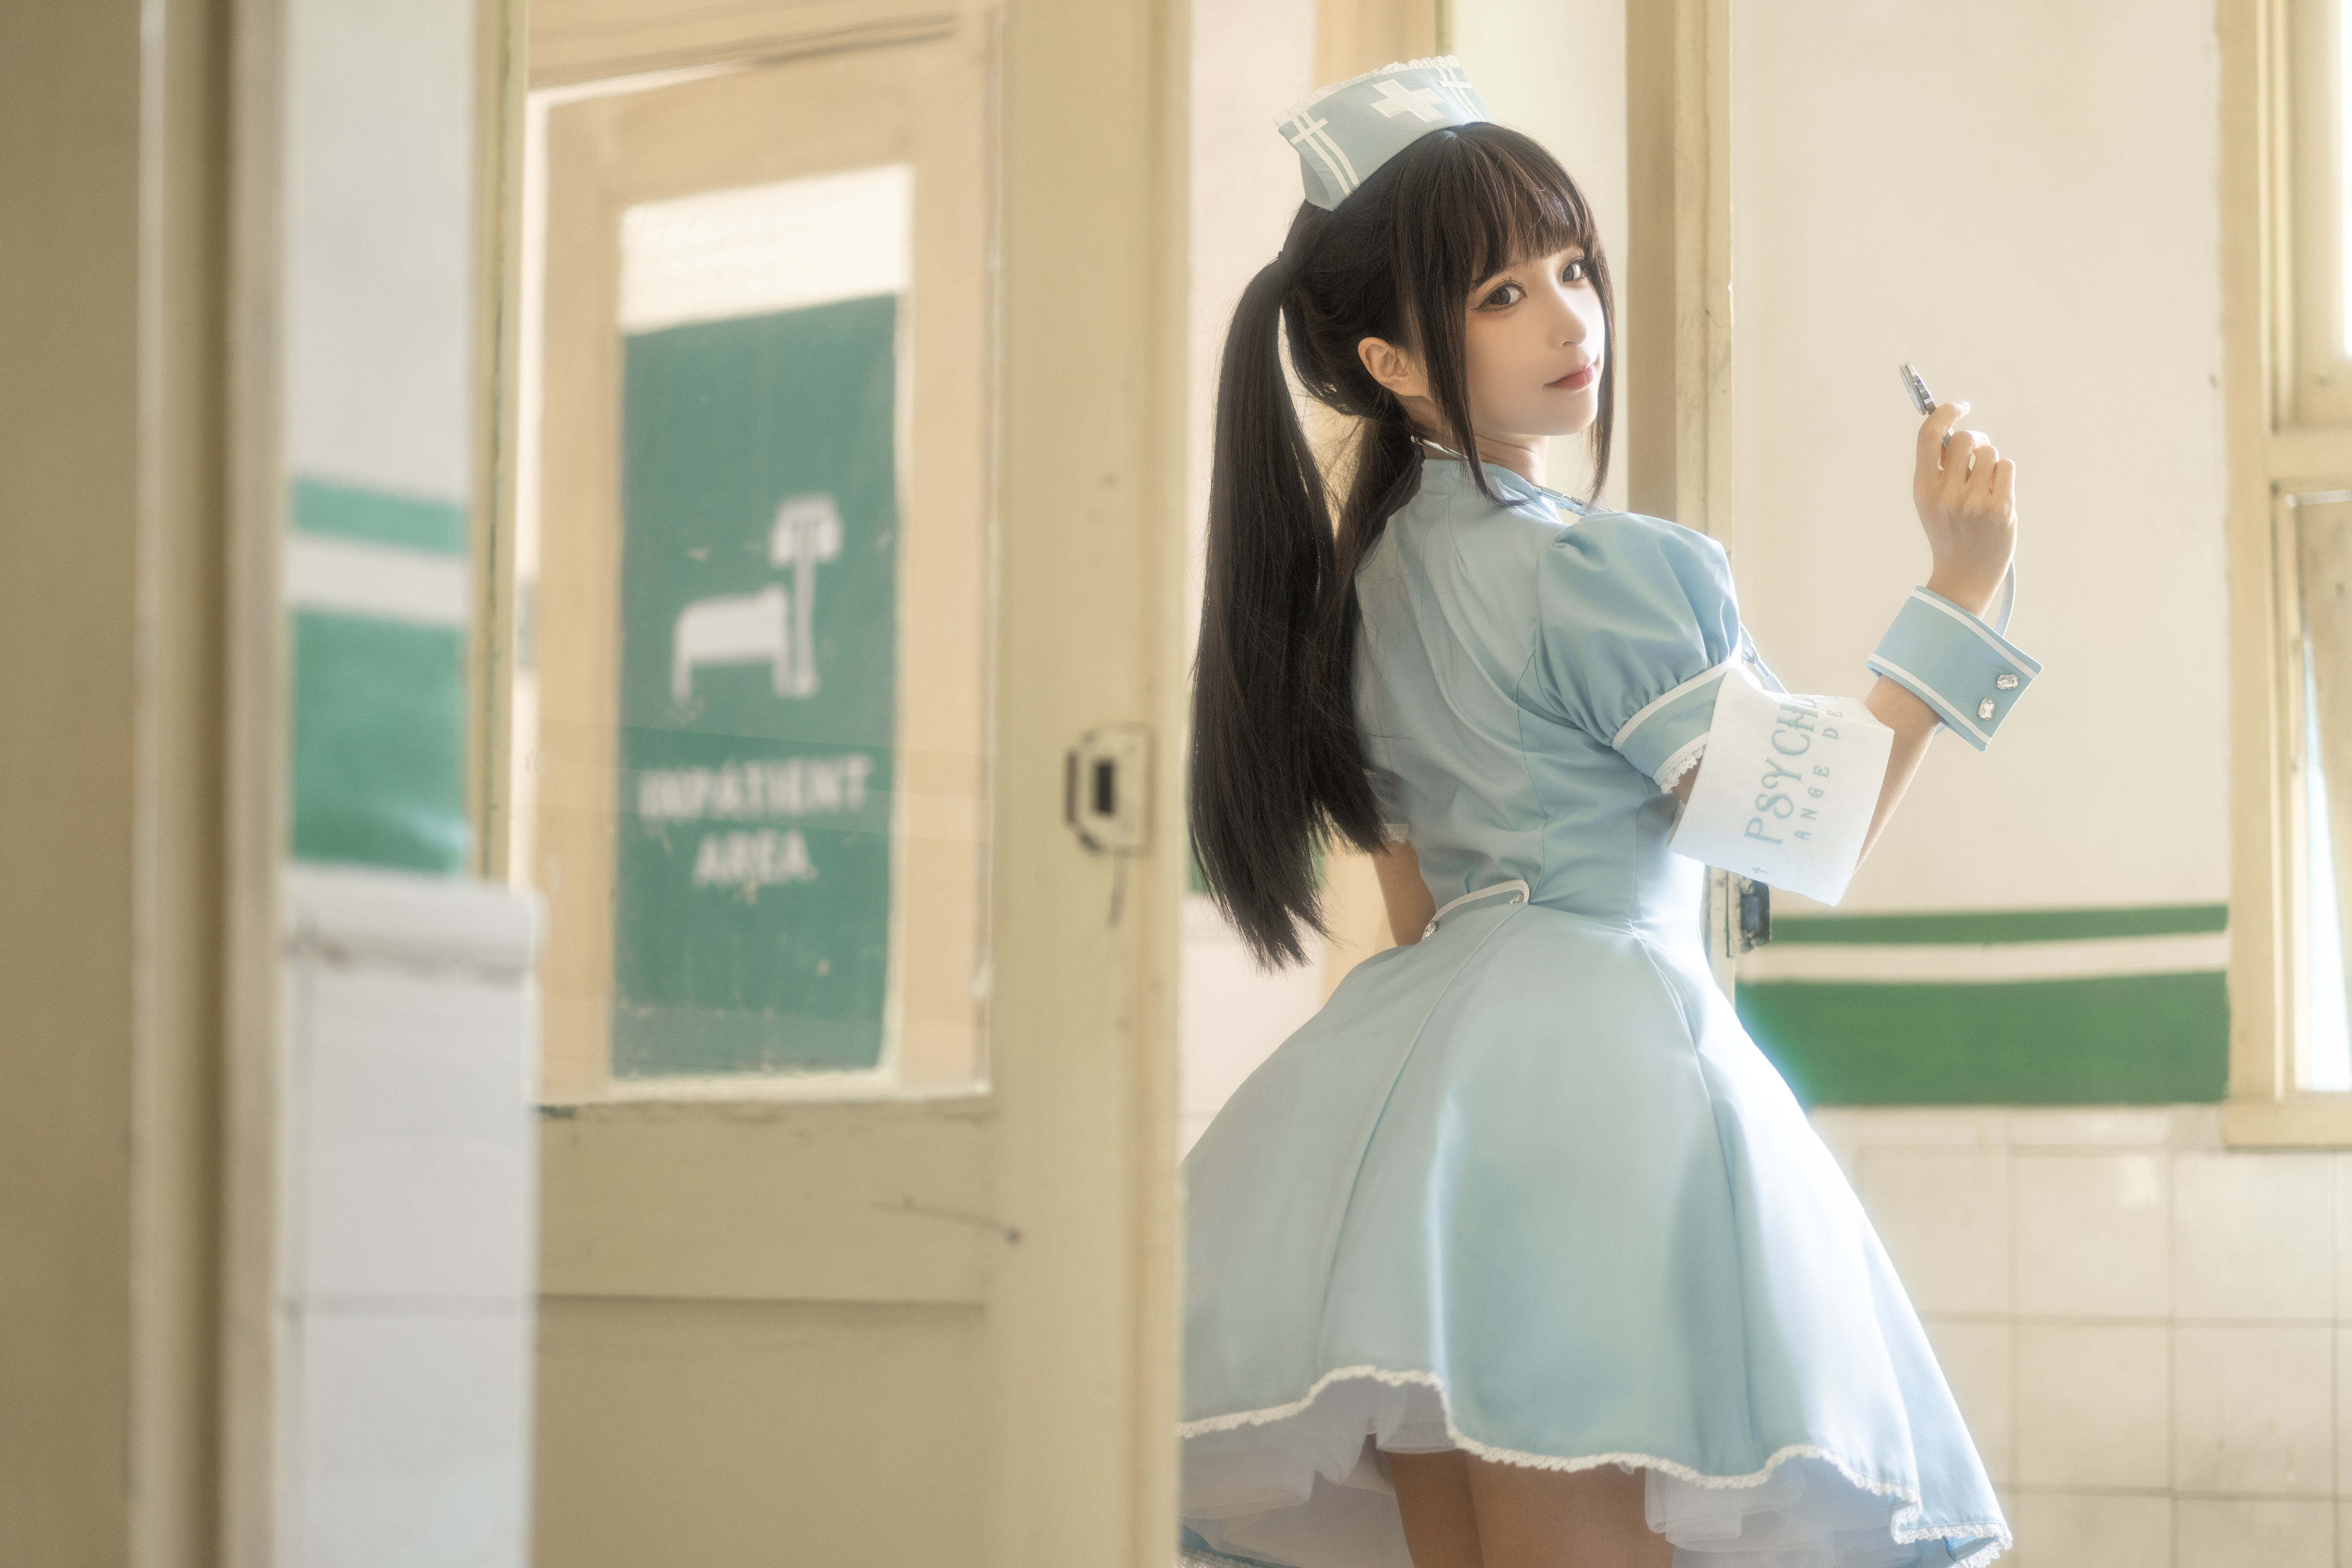 People 5641x3761 Chun Momo women model Asian cosplay nurses nurse outfit hospital indoors women indoors twintails dress